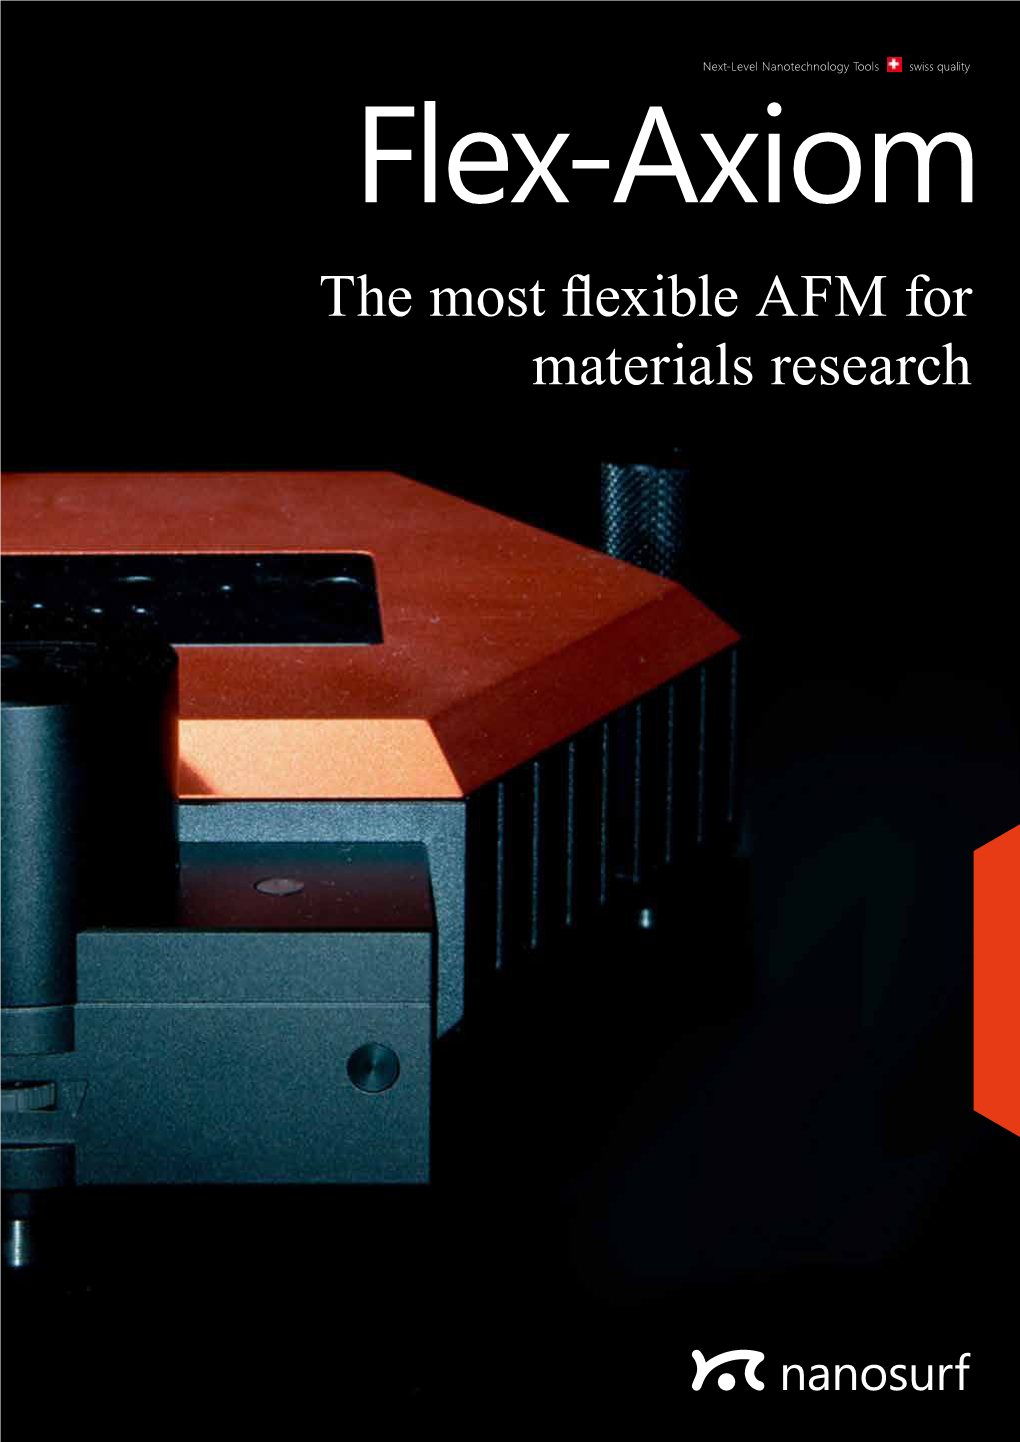 Nanosurf-Flex-Axiom-Brochure